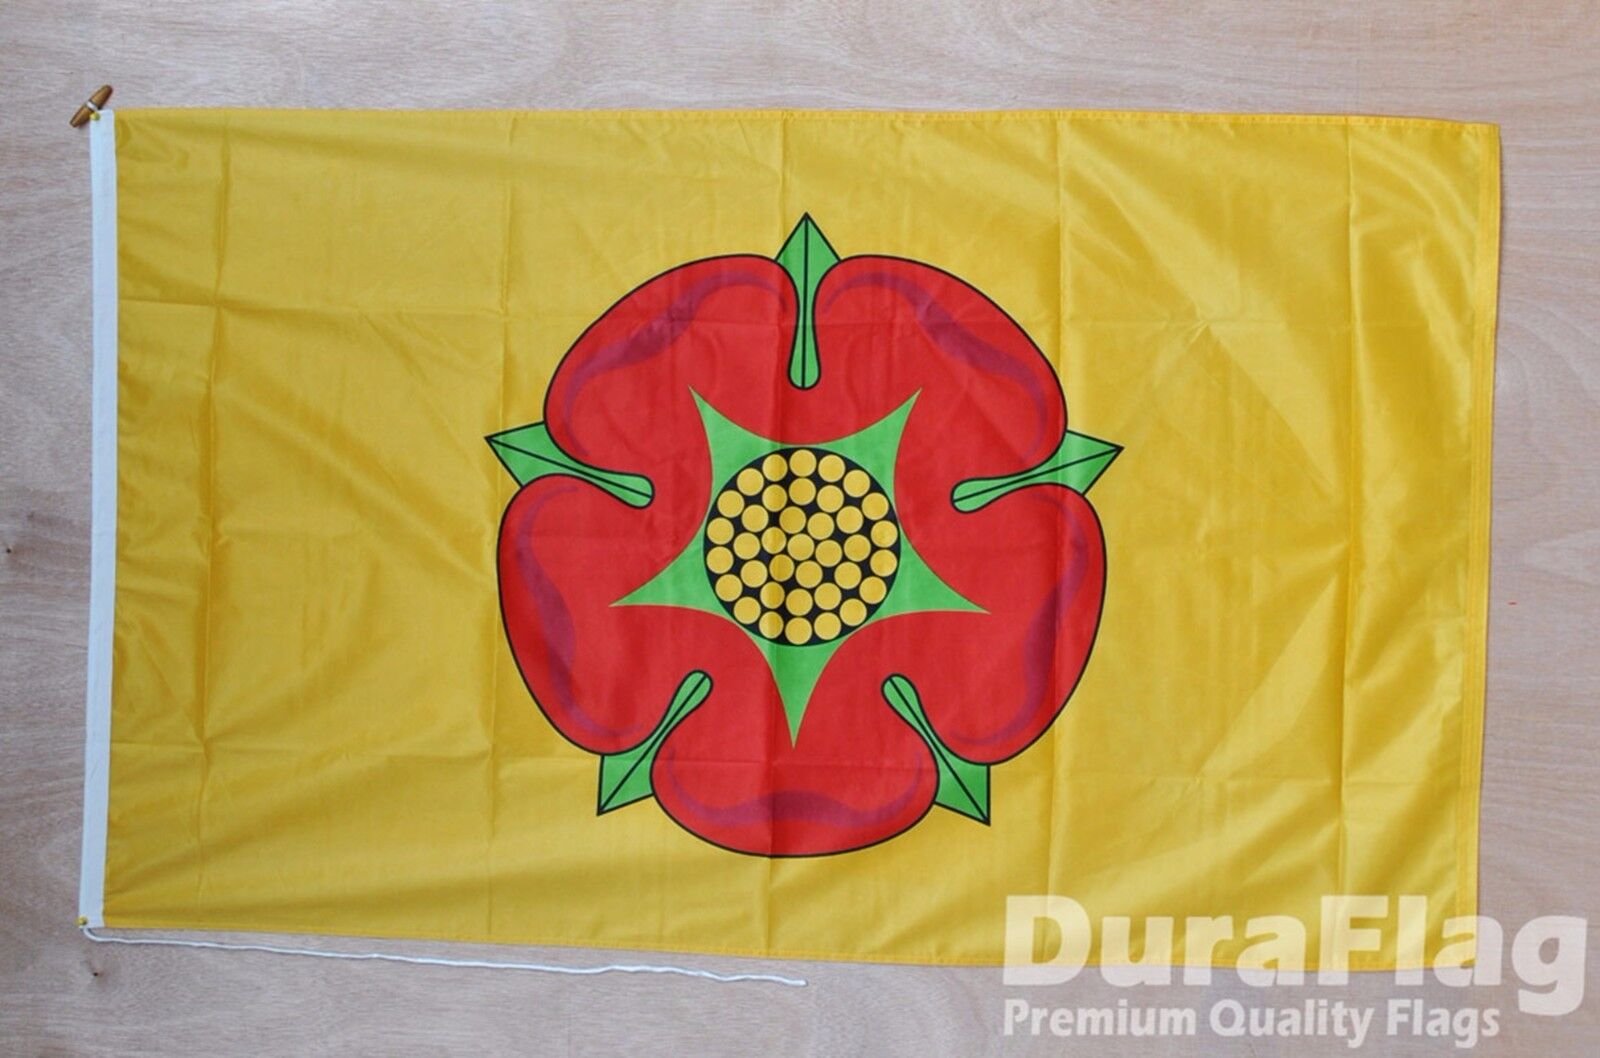 LANCASHIRE NEW DURAFLAG 150cm x 90cm 5x3 FEET HIGH QUALITY FLAG ROPE & TOGGLE